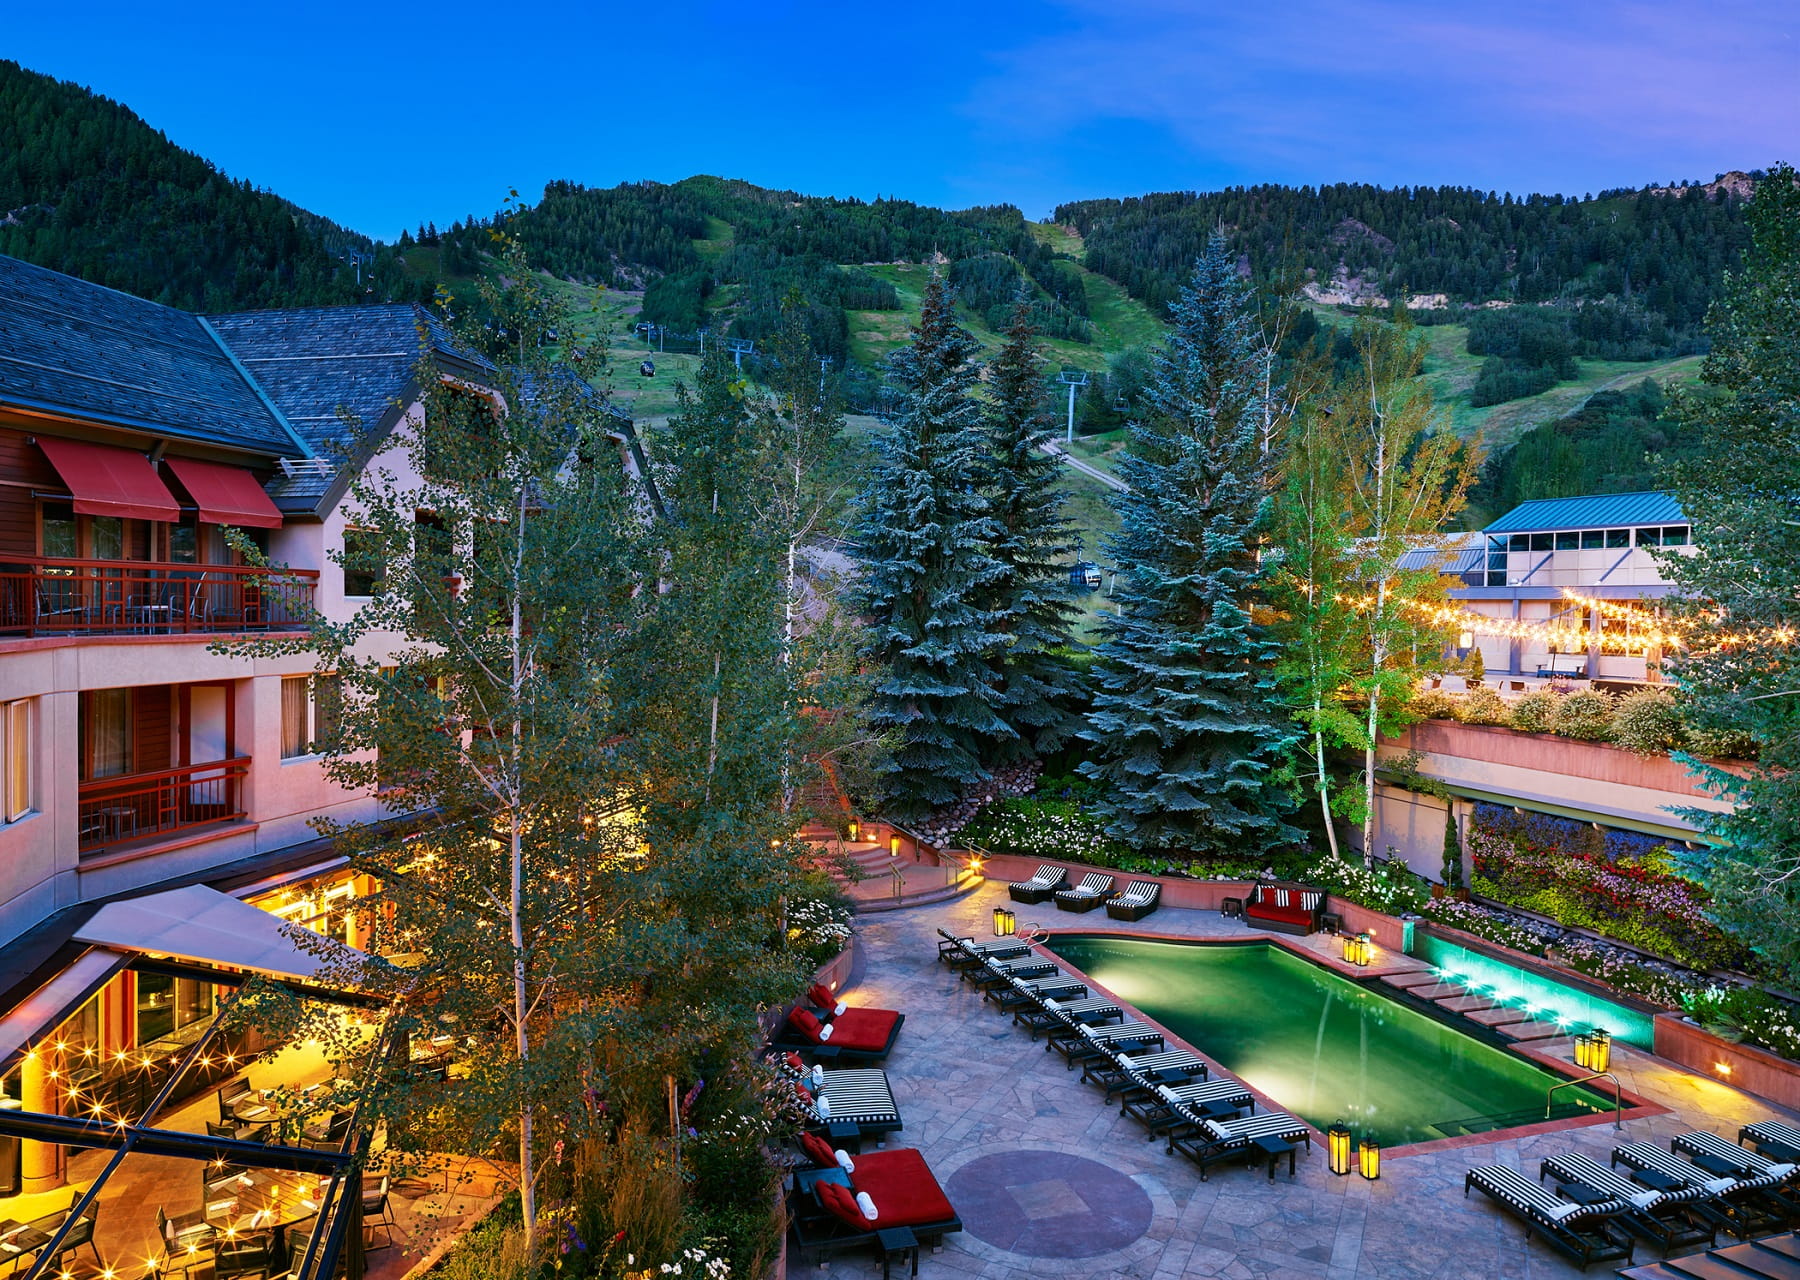 Aspen Mountain and pool courtyard